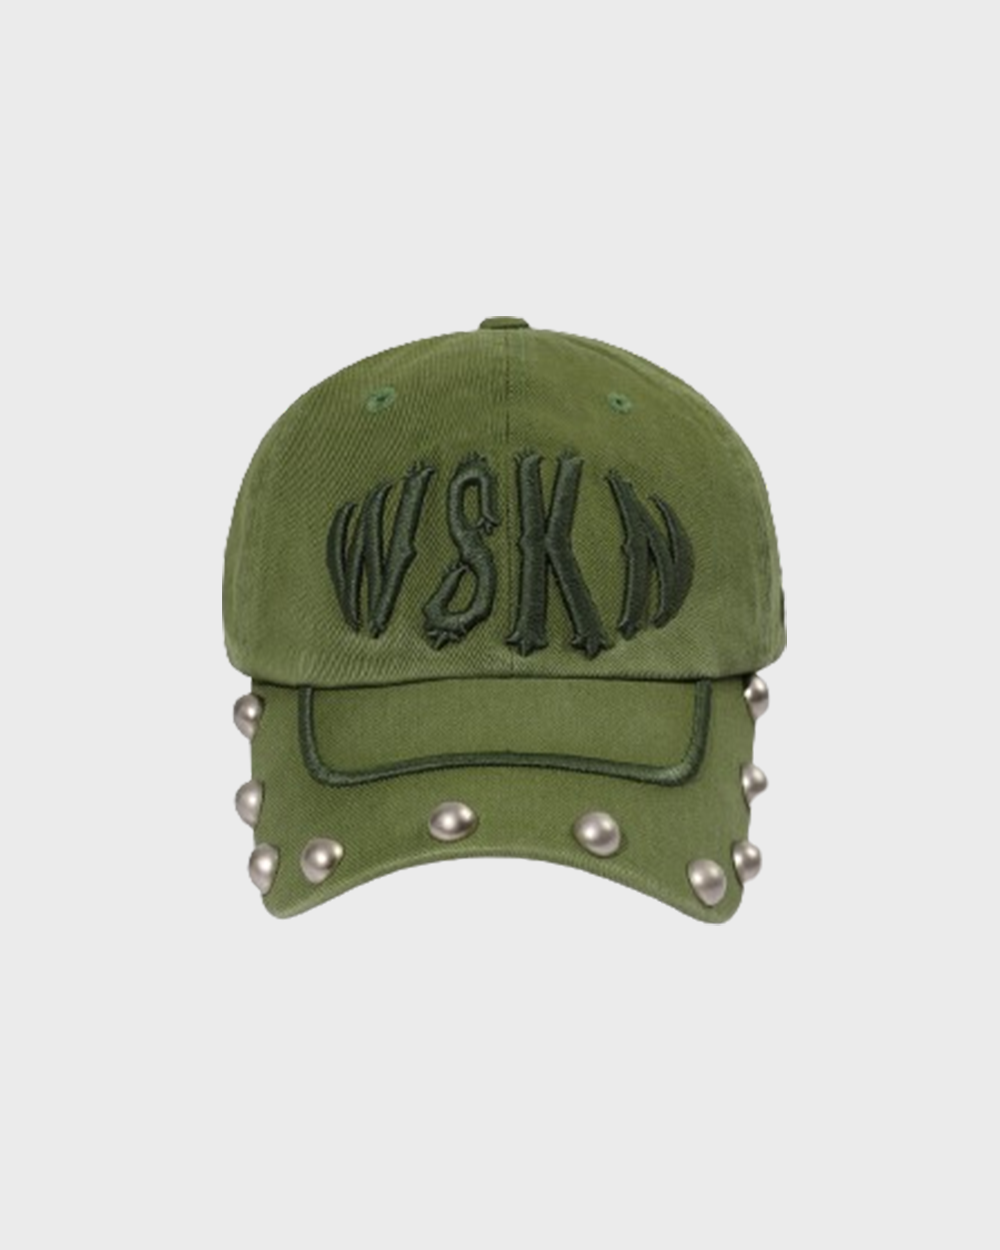 WSKN Embroidered Stud Cap (Olive)